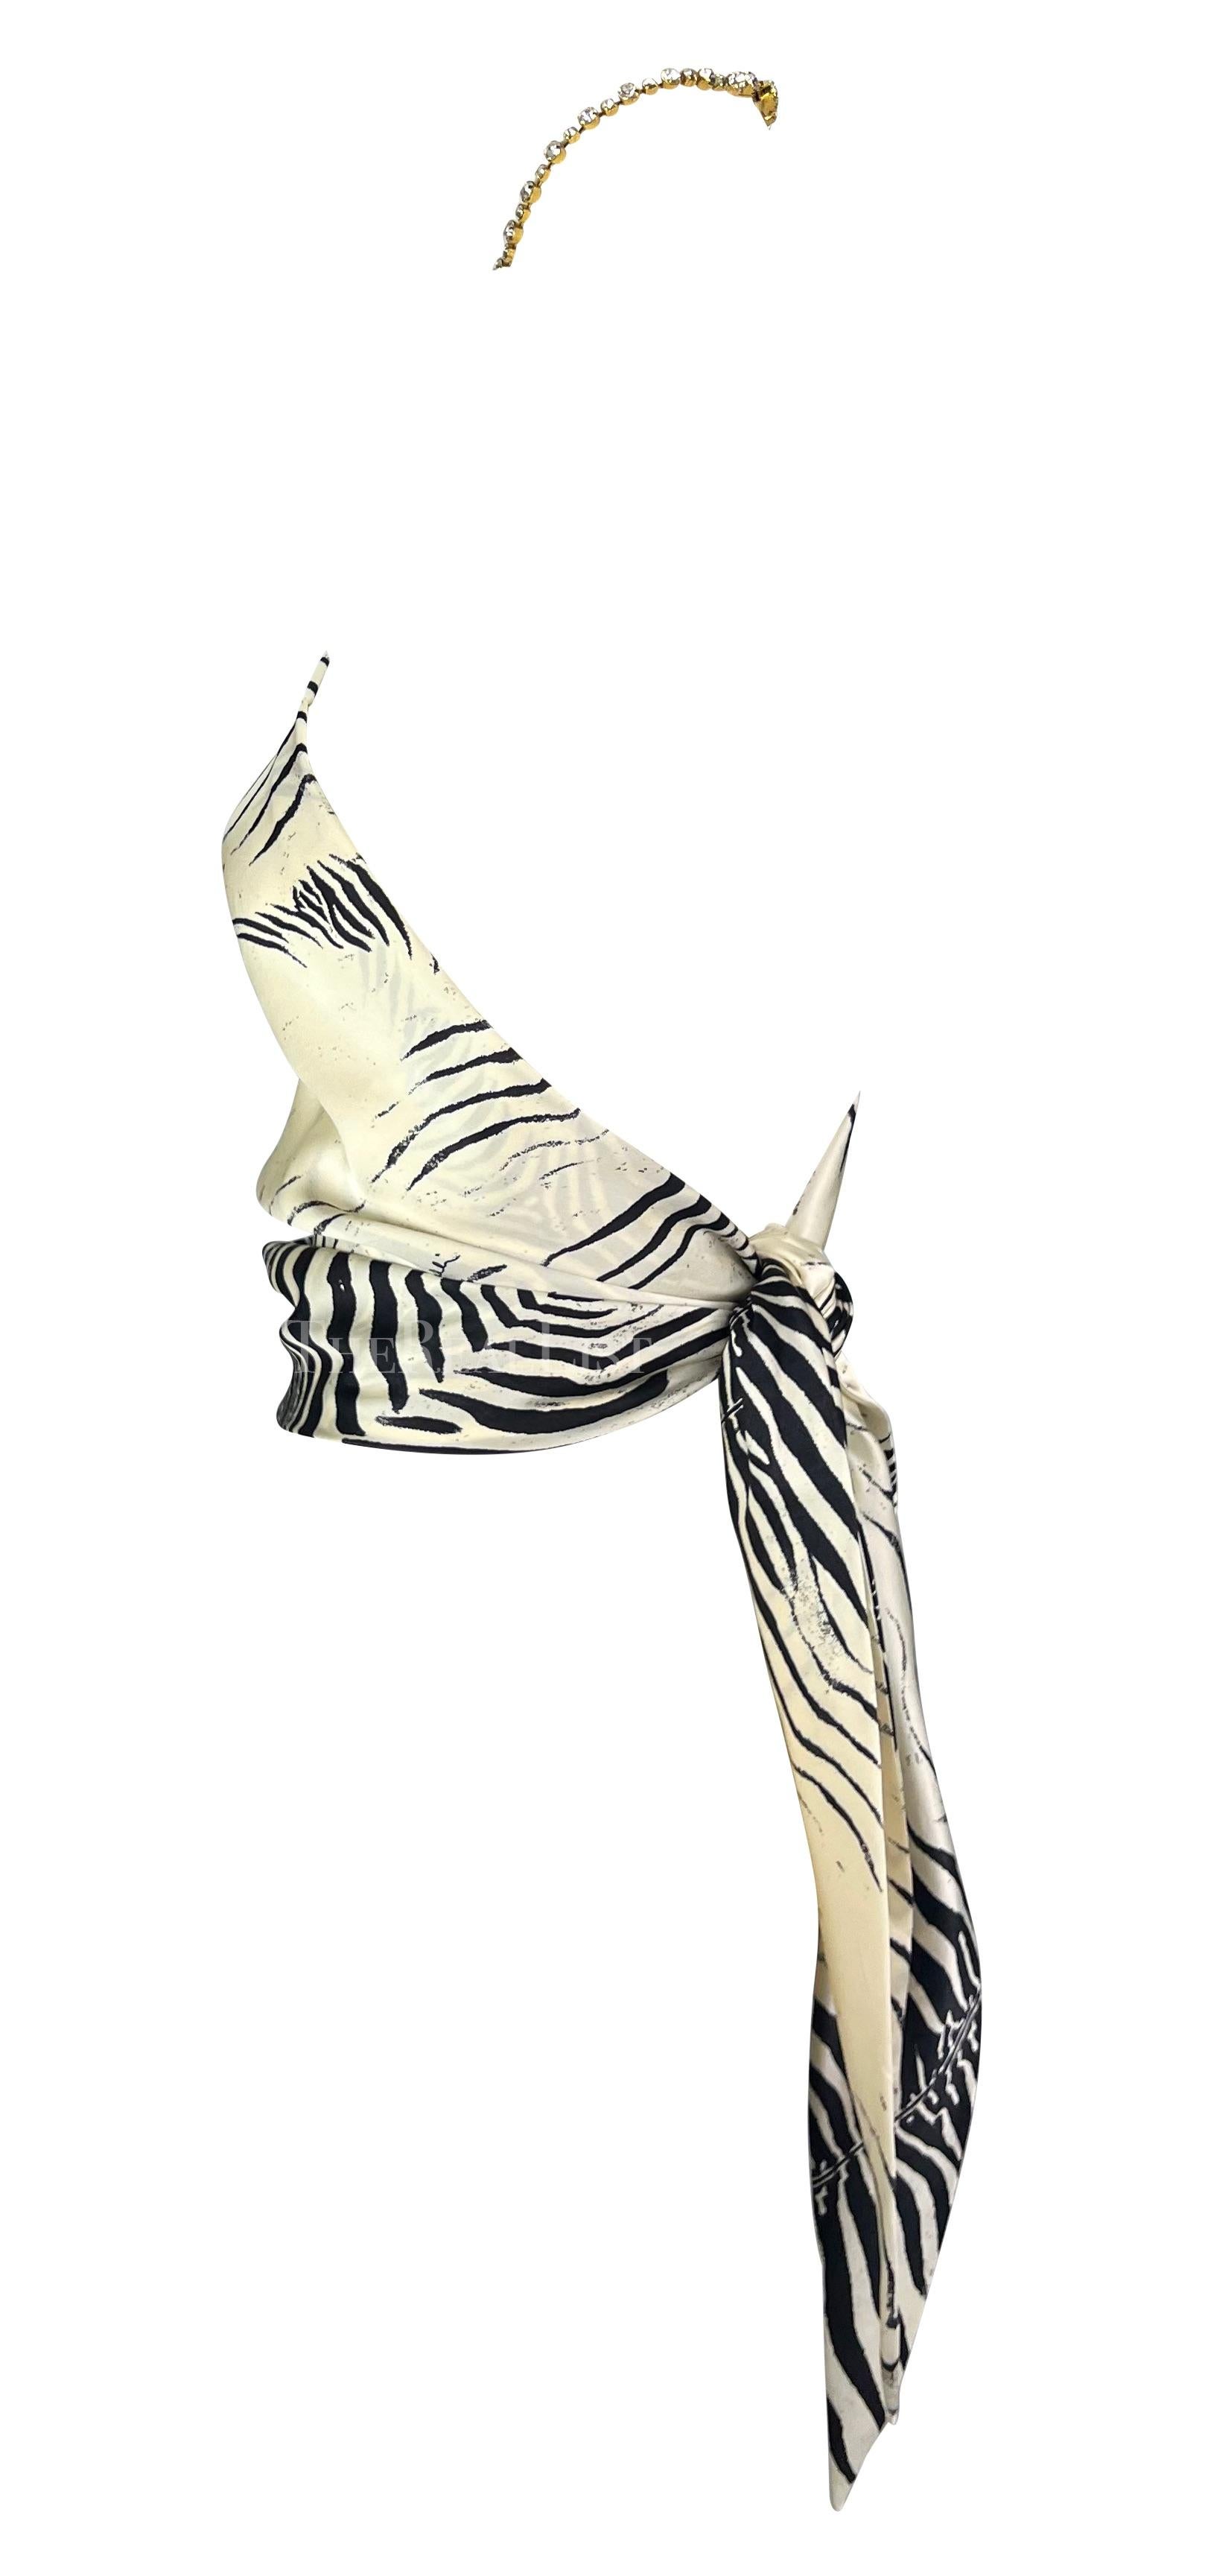 Women's S/S 2000 Roberto Cavalli Rhinestone Zebra Print Triangle Silk Scarf Crop Top For Sale